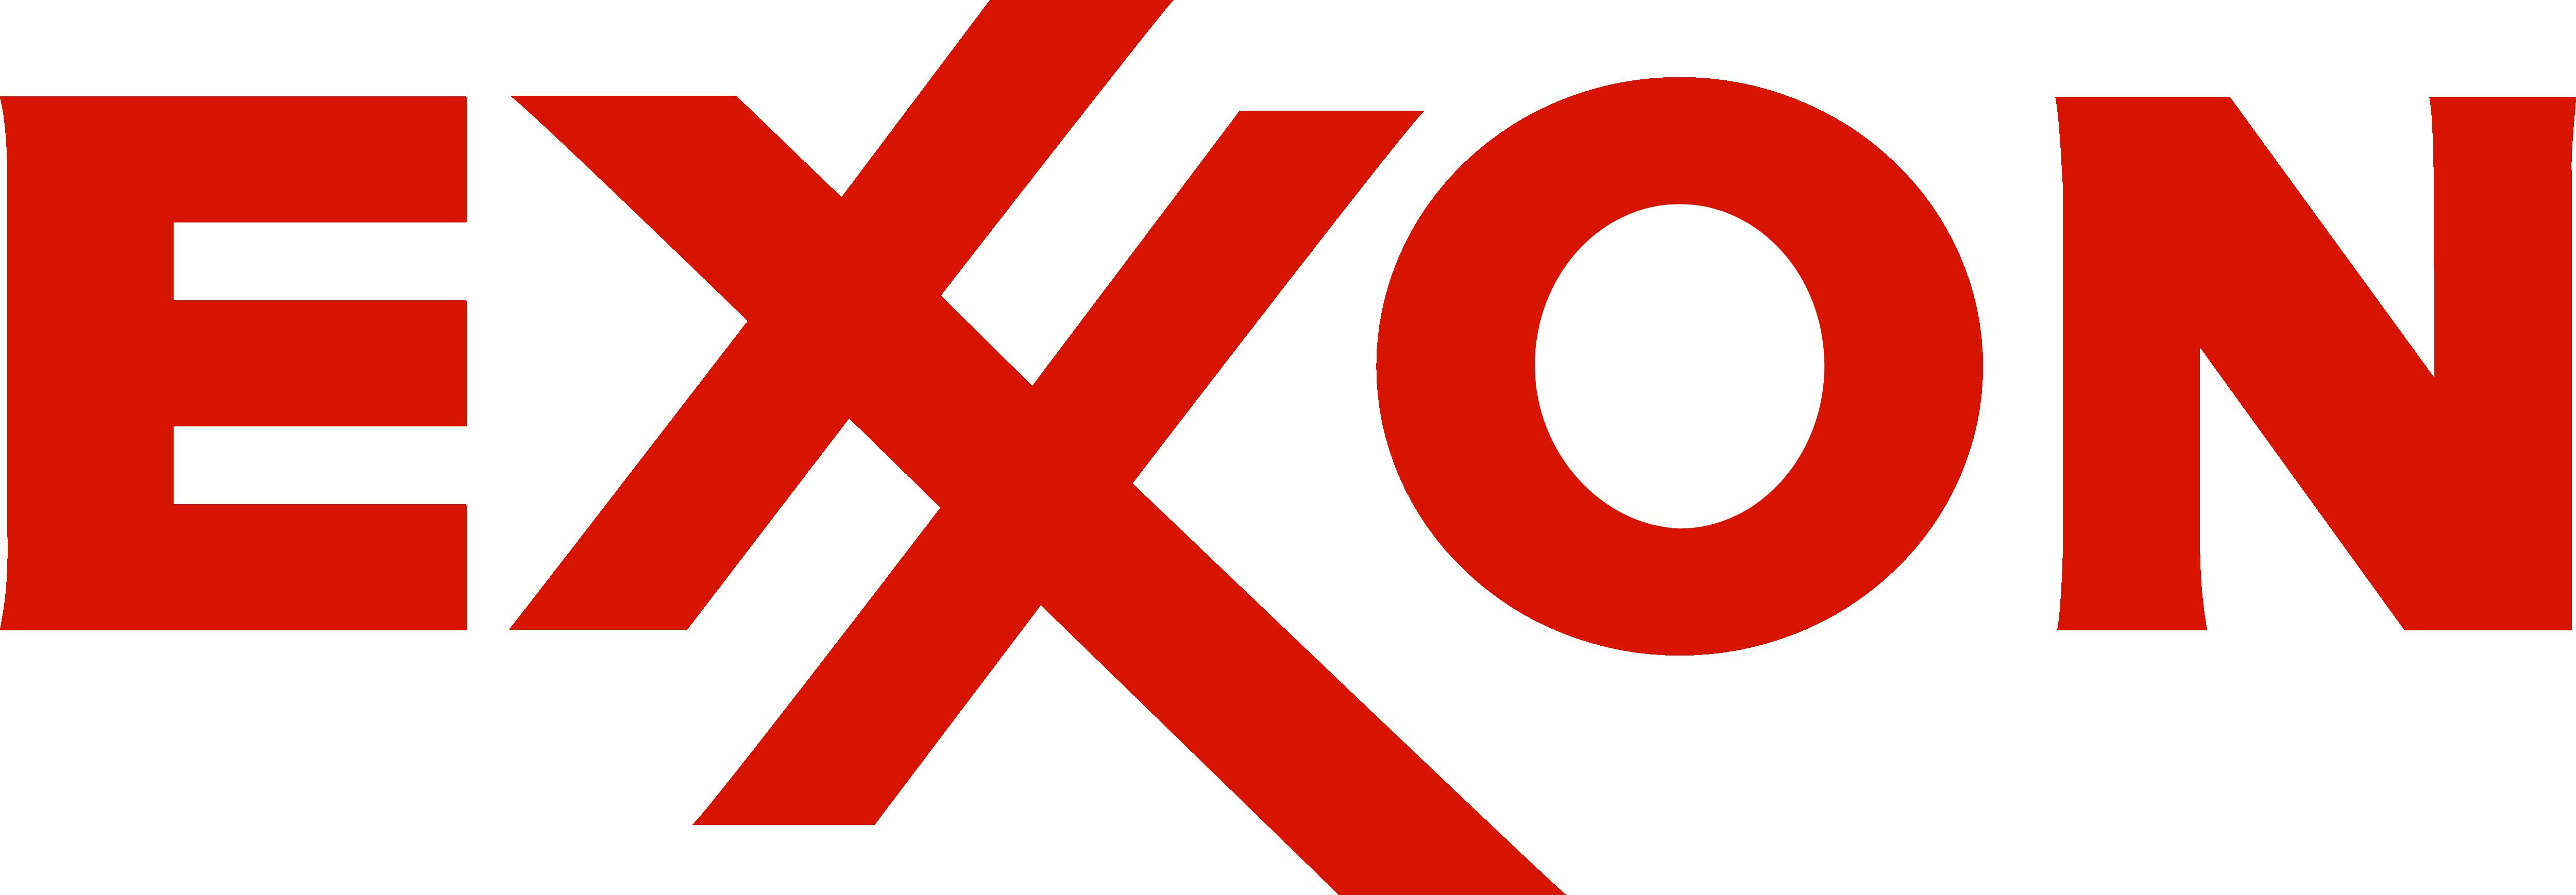 Exxon (XOM) records highest annual profit ever